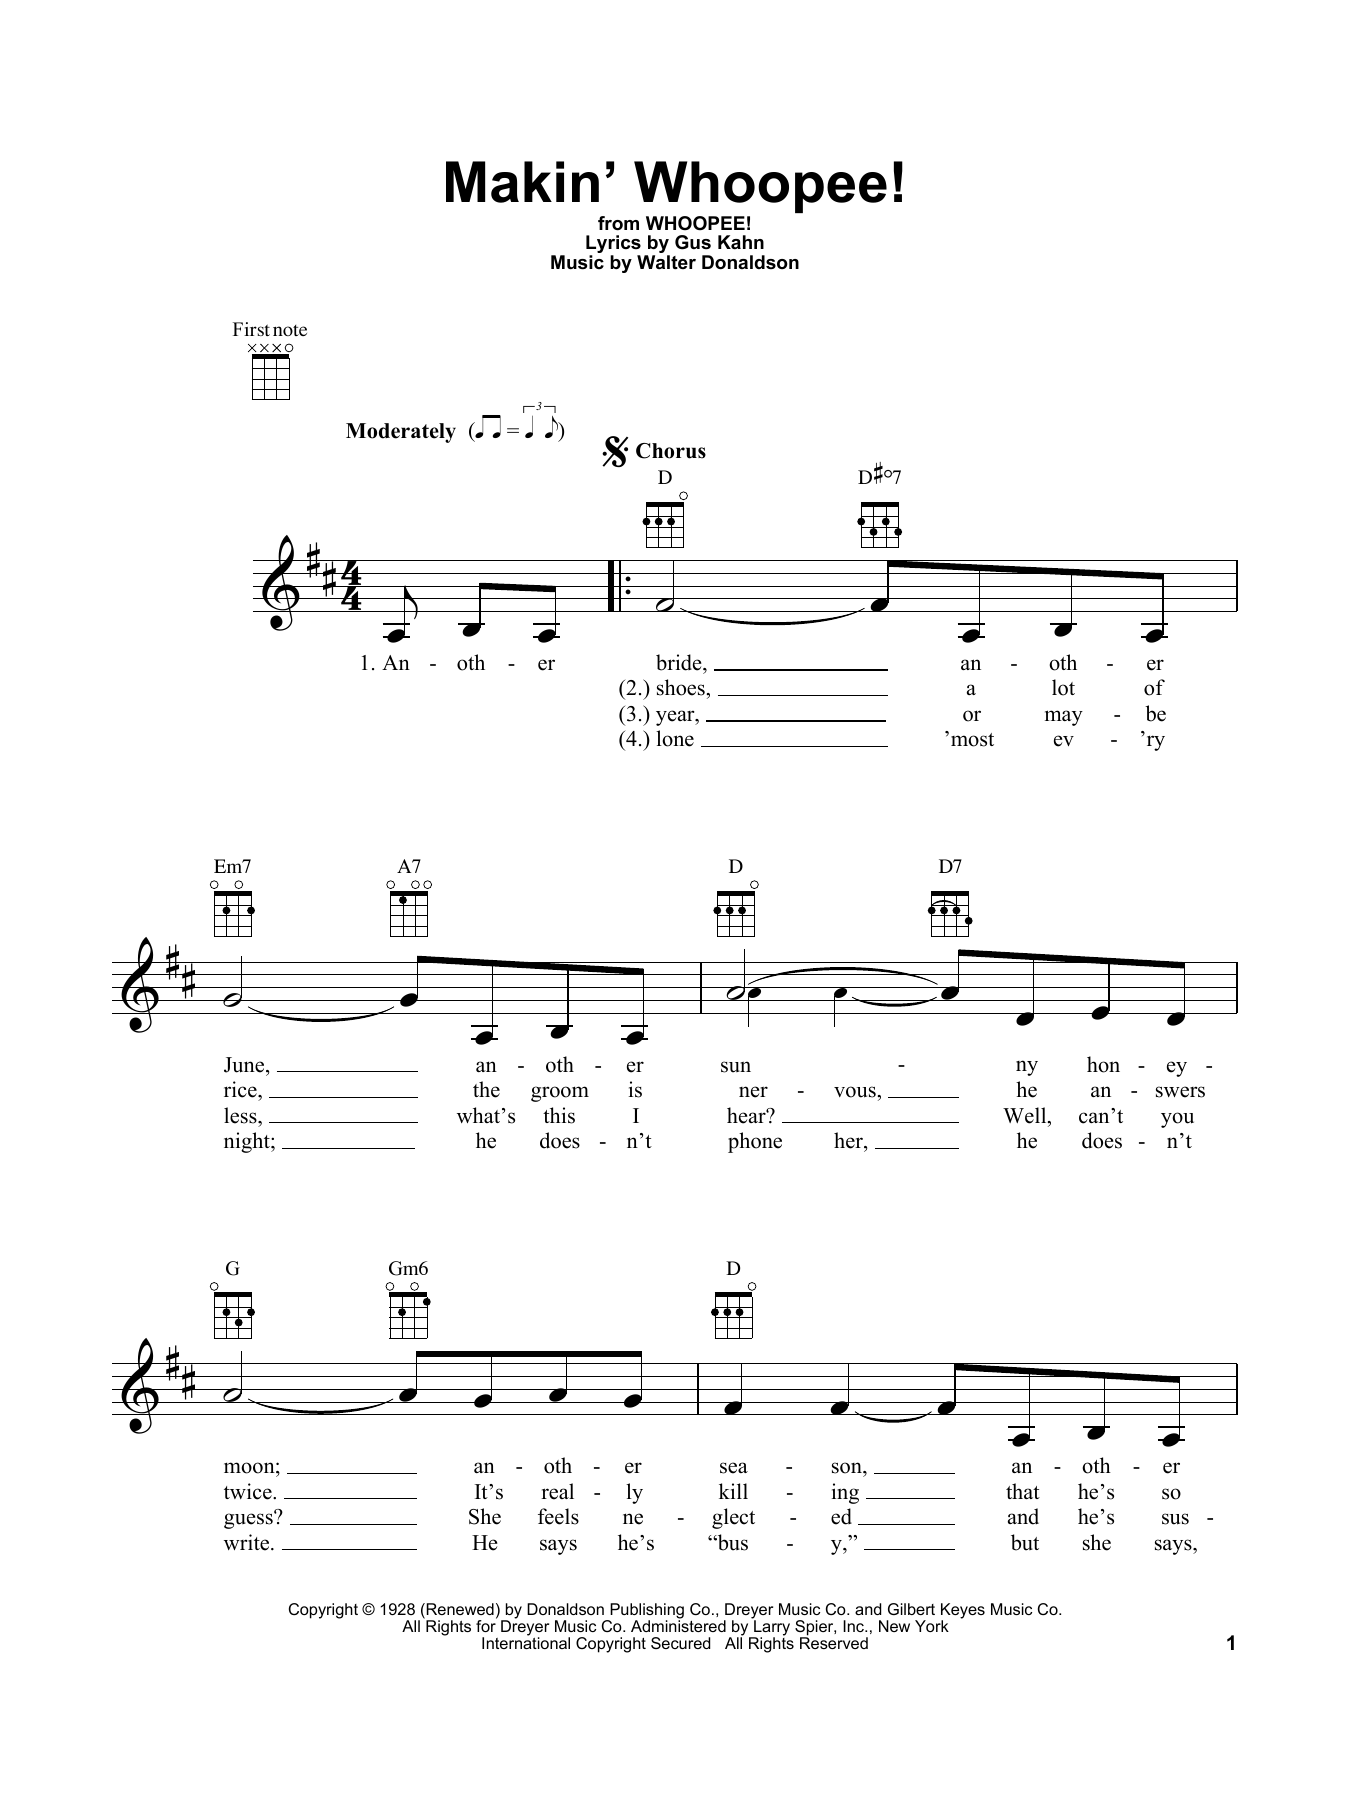 John Hicks Makin' Whoopee! Sheet Music Notes & Chords for Melody Line, Lyrics & Chords - Download or Print PDF